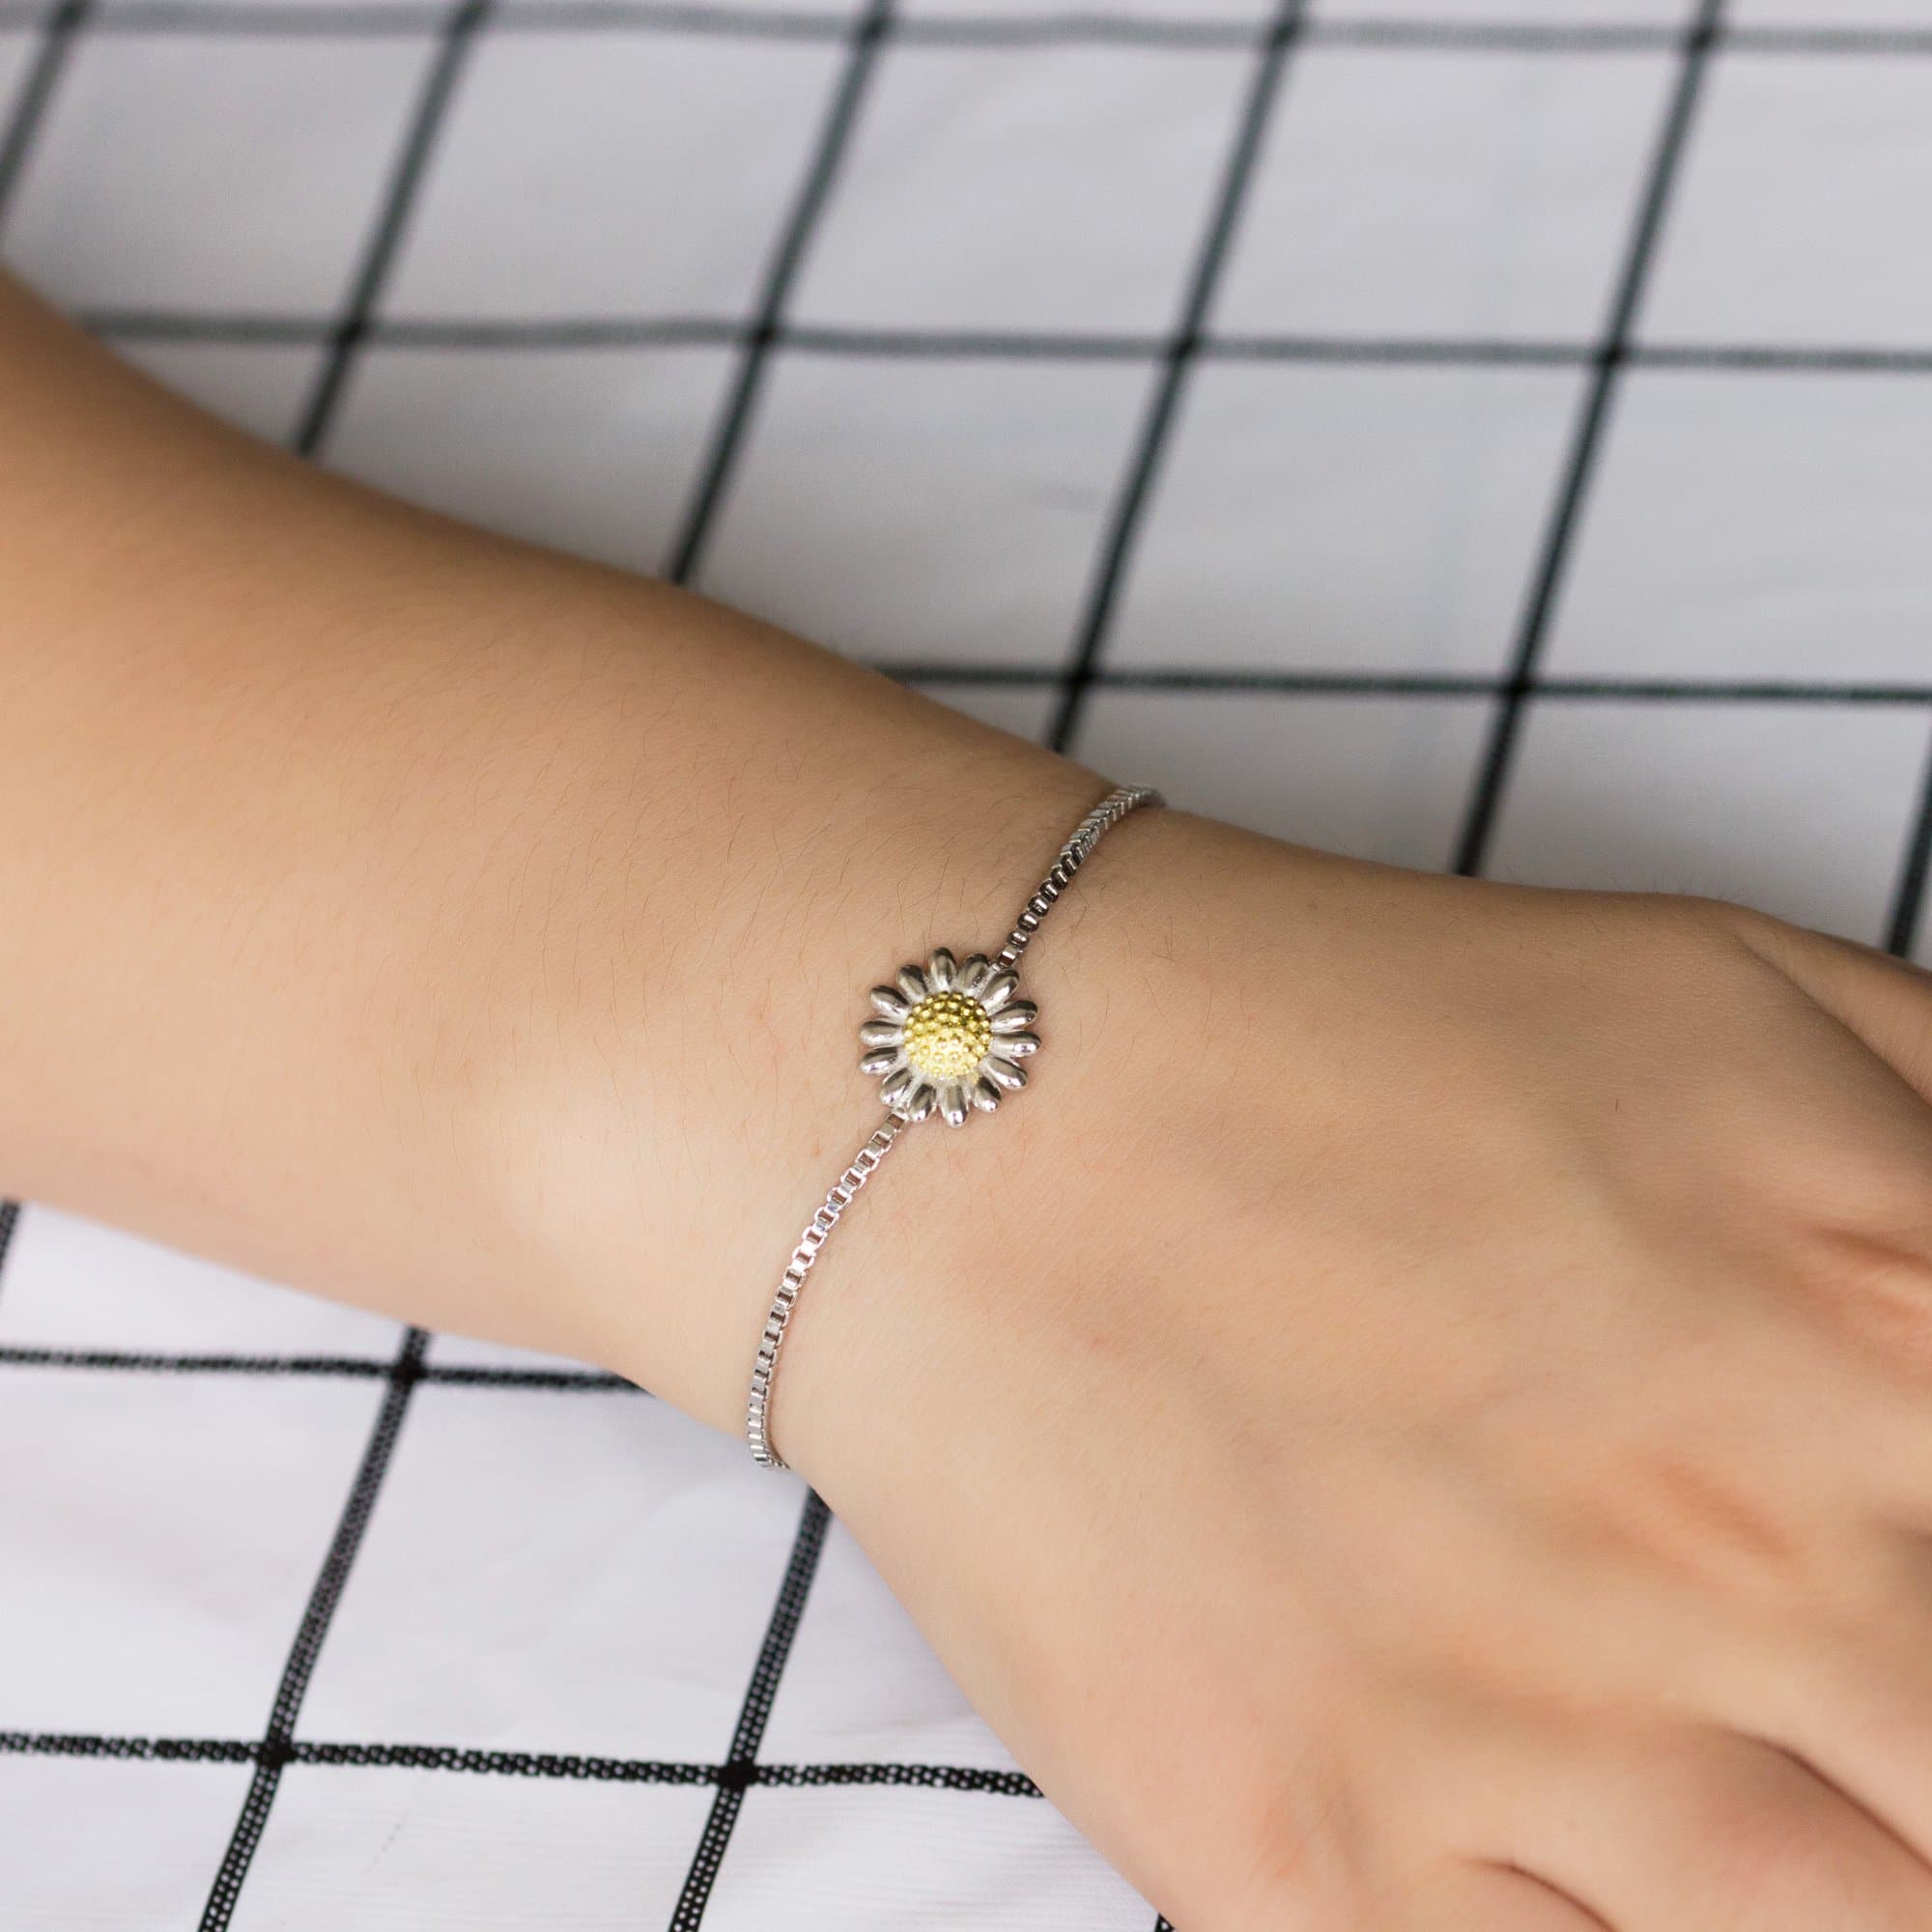 Daisy Friendship Bracelet Created with Zircondia® Crystals